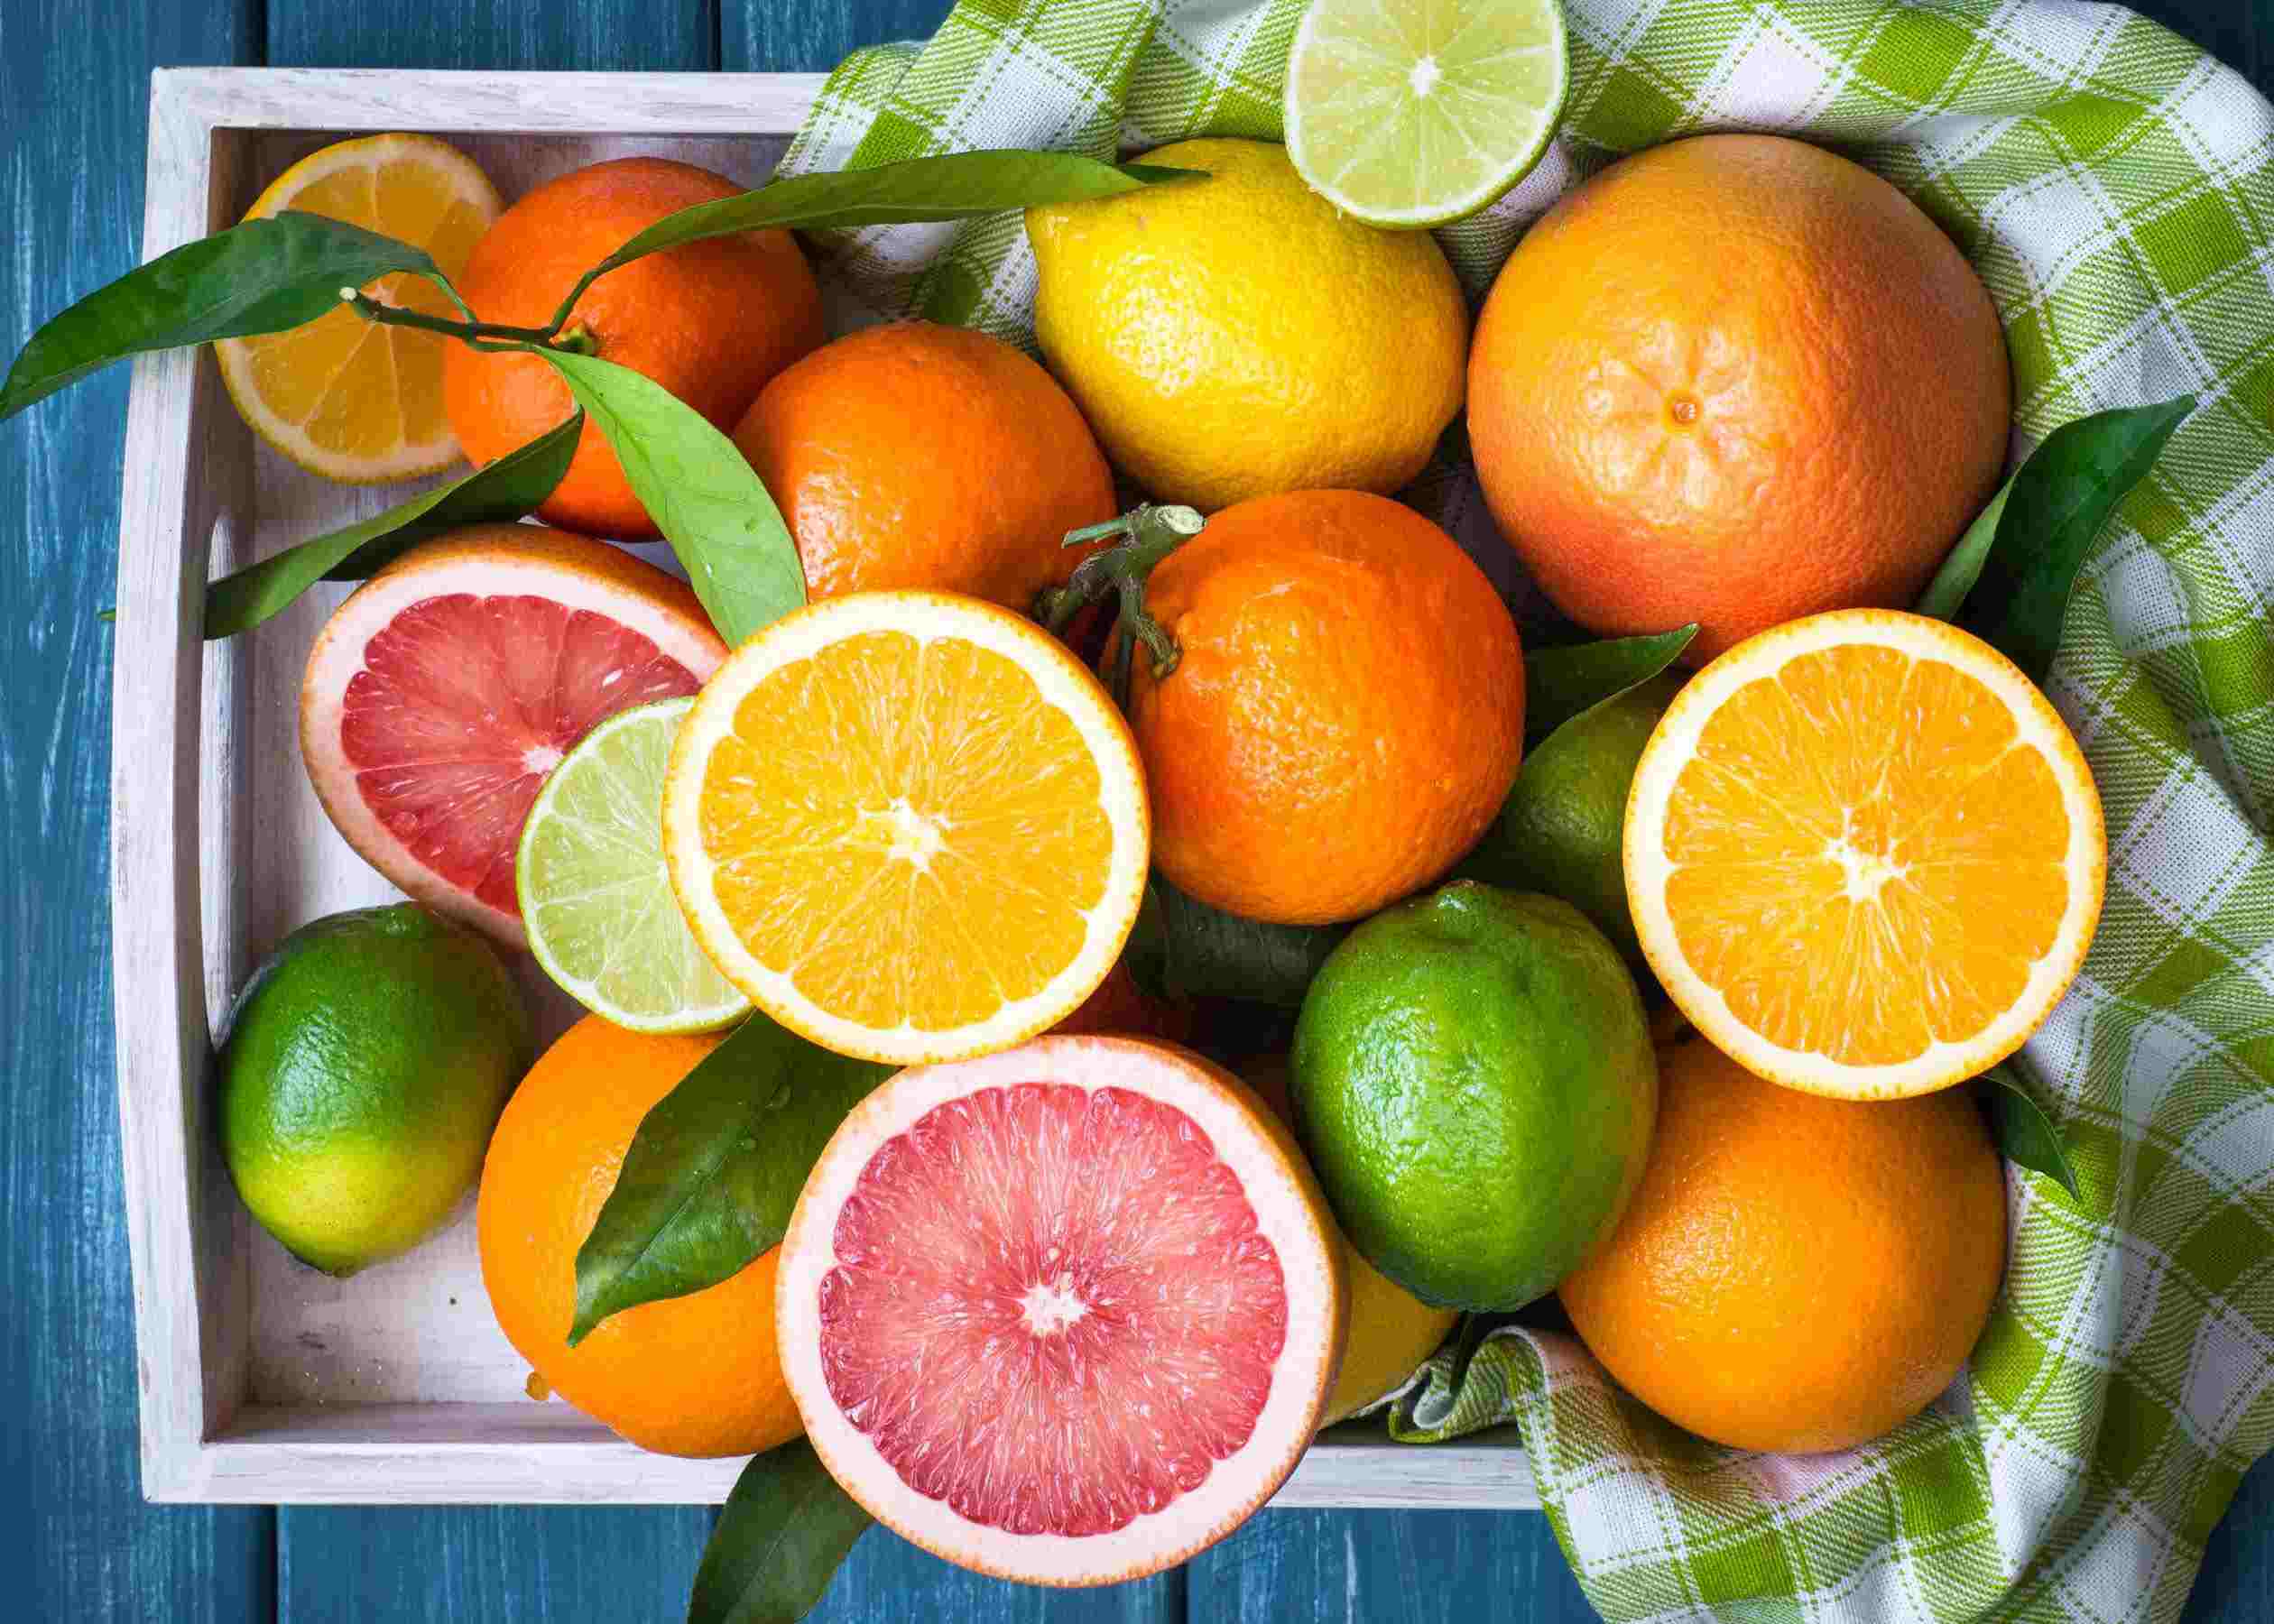 Фруктово цитрусовый. Цитрус мандарин +апельсин. Фрукт цитрус кумкват. Апельсин, лимон, мандарин, грейпфрут, Цитрон. Лайм лимон апельсин мандарин.